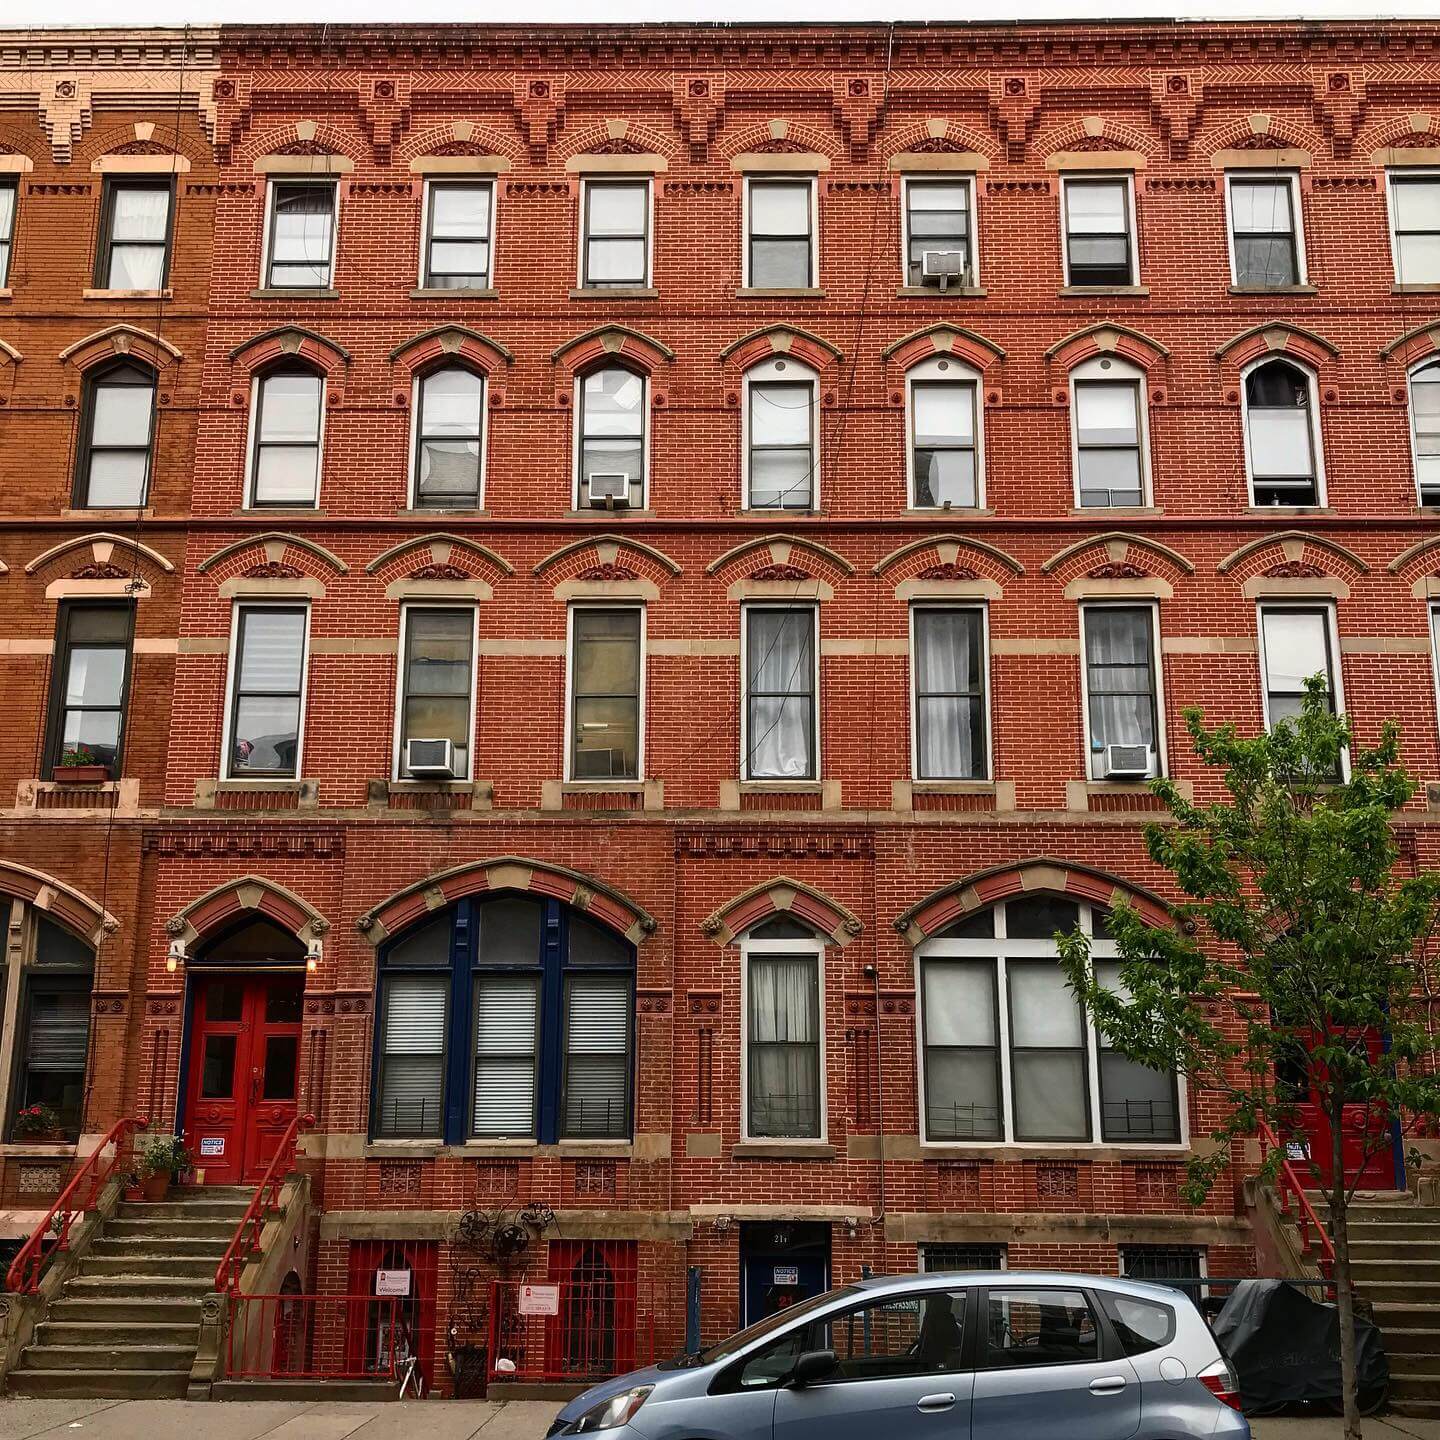 New York County: Ascendant Neighborhood Development Corporation - East-Central Harlem Historic District Cultural Resource Survey